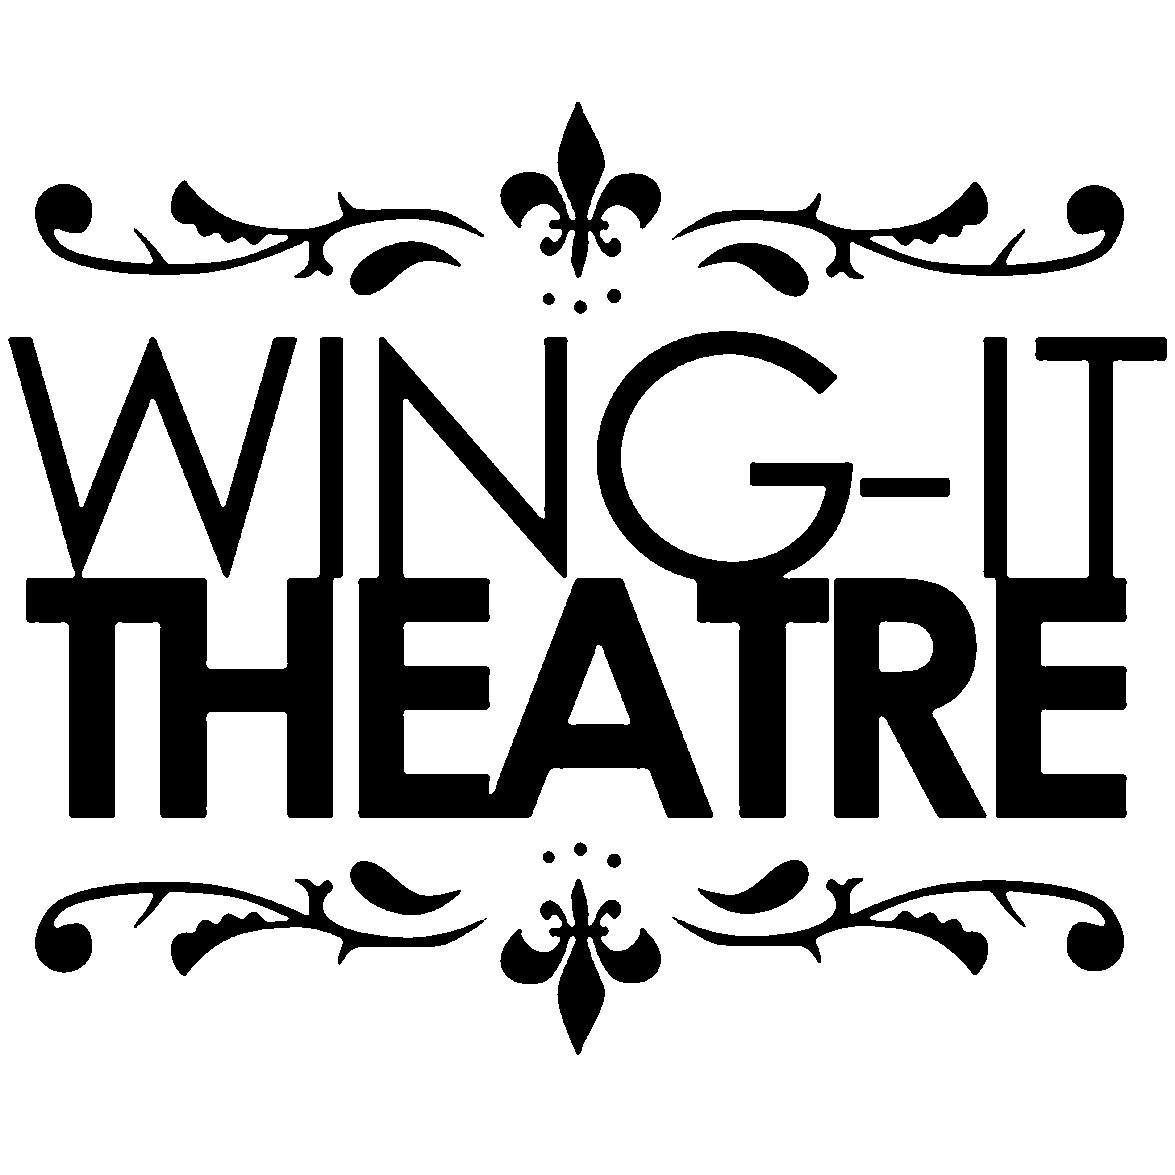 Wing-it Theatre